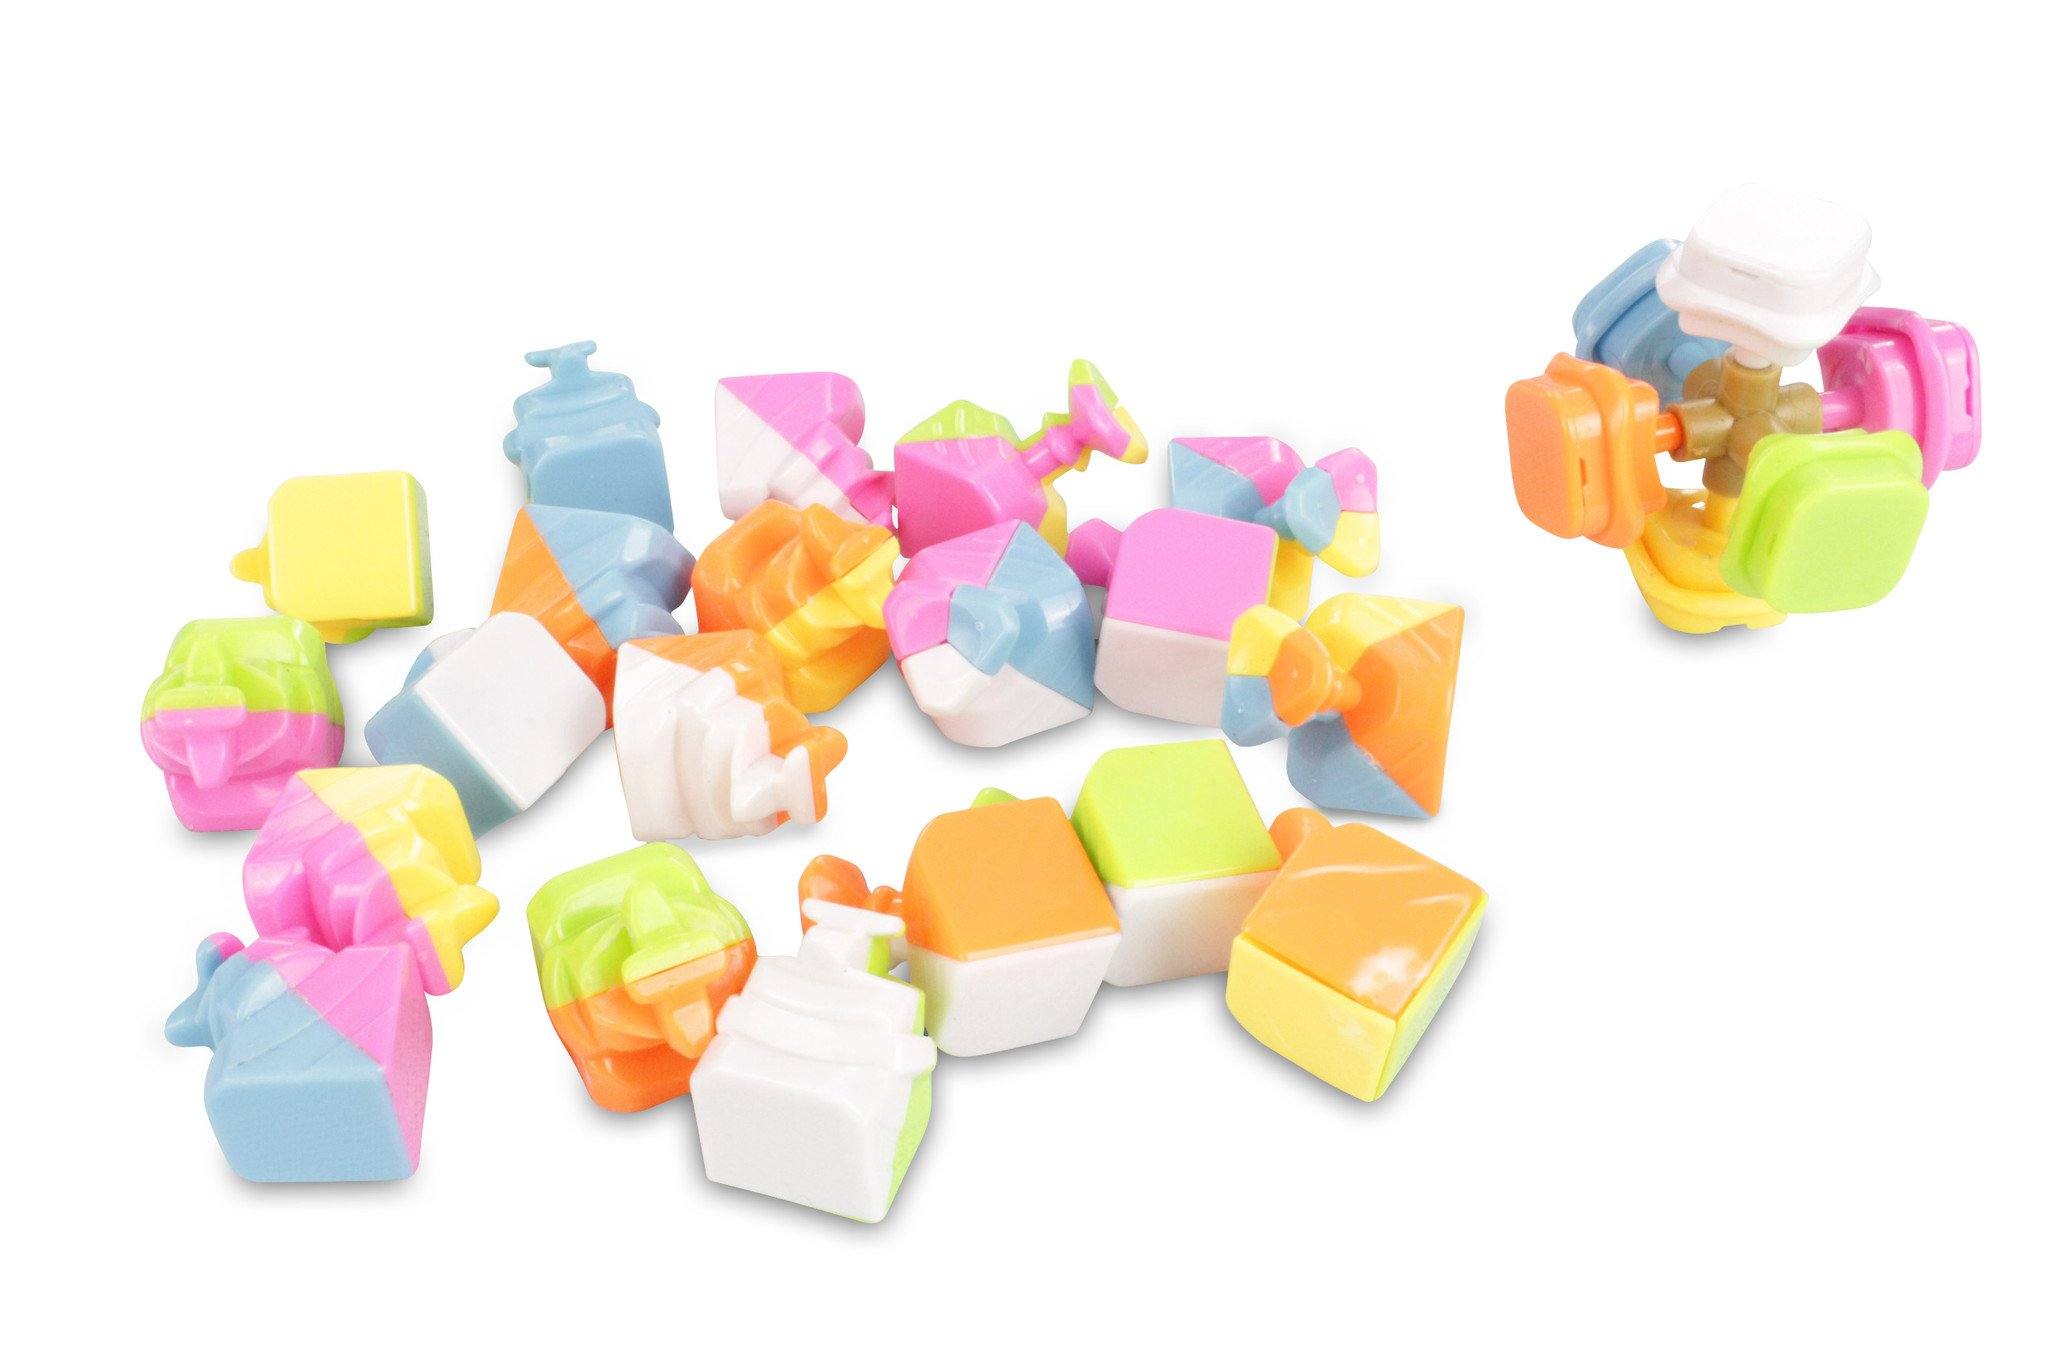 6x6 Rubik's Cube – Speedcube – Speedcube NZ AU